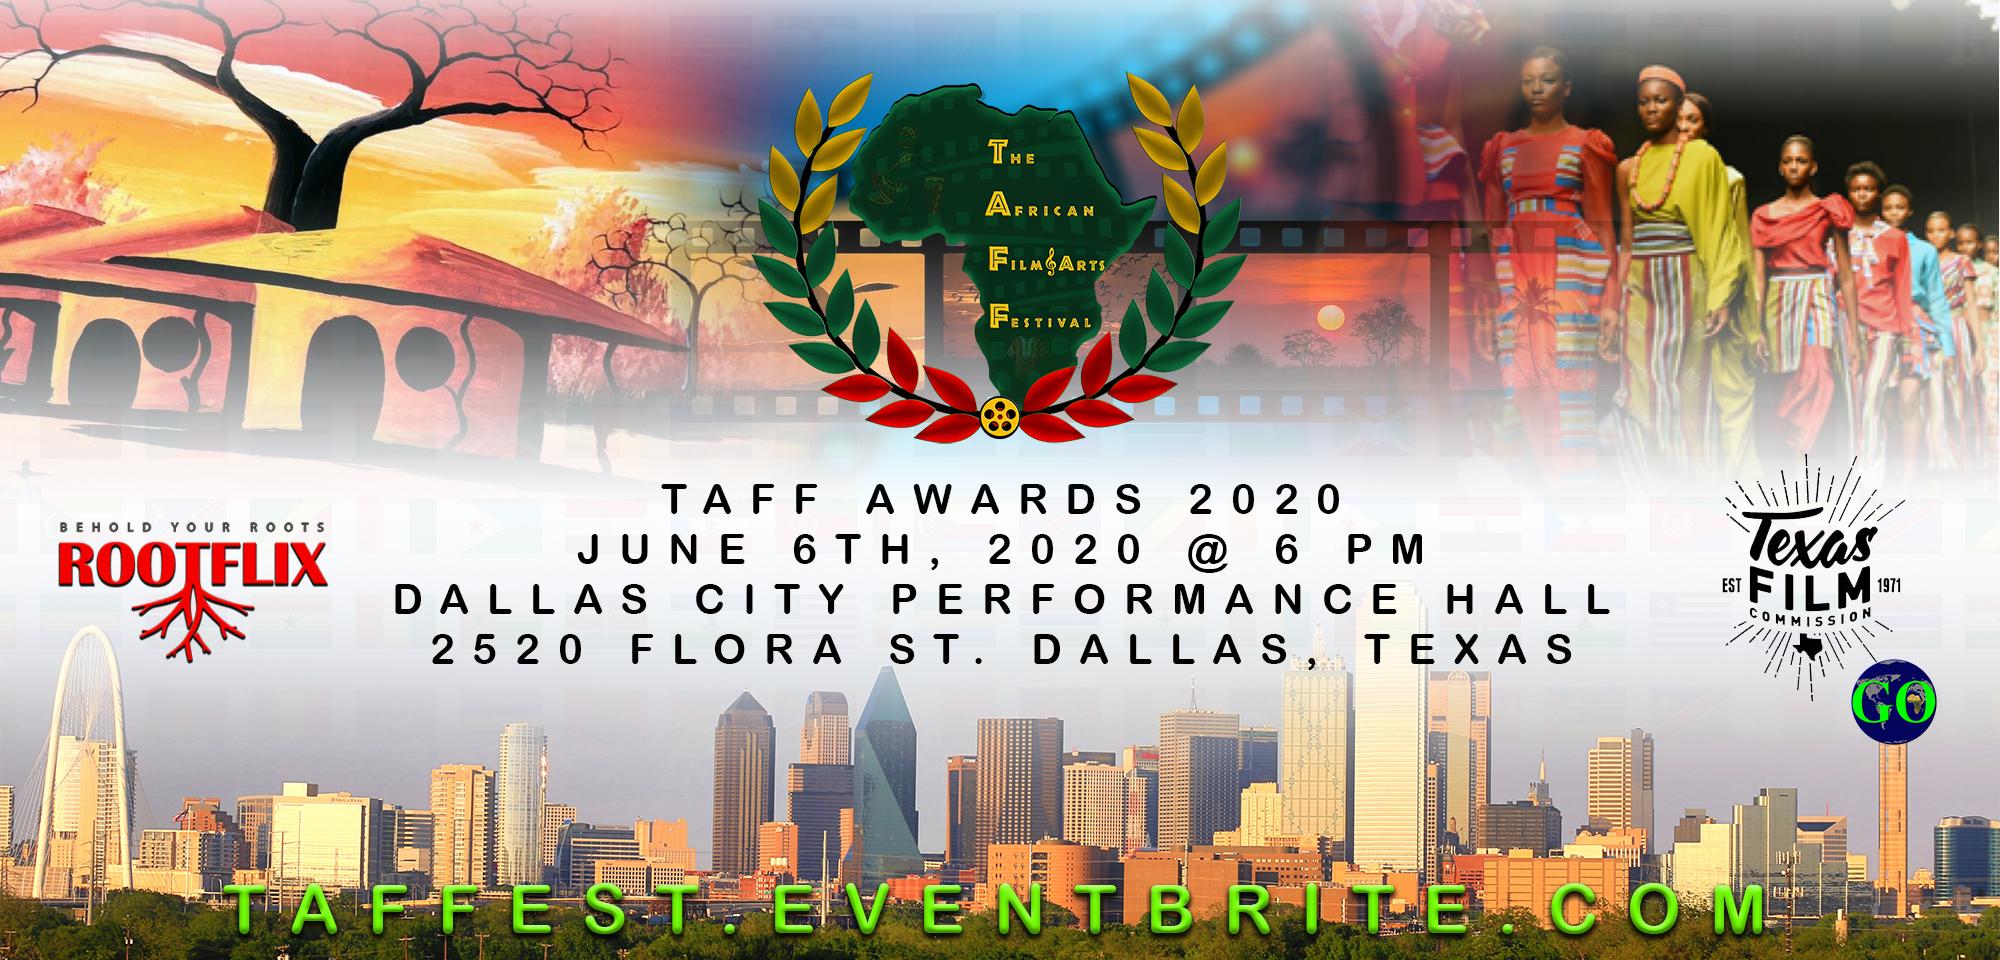 •★•THE AFRICAN FILM FESTIVAL (TAFF) AWARDS DALLAS, TEXAS JUNE 6TH, 2020•★•